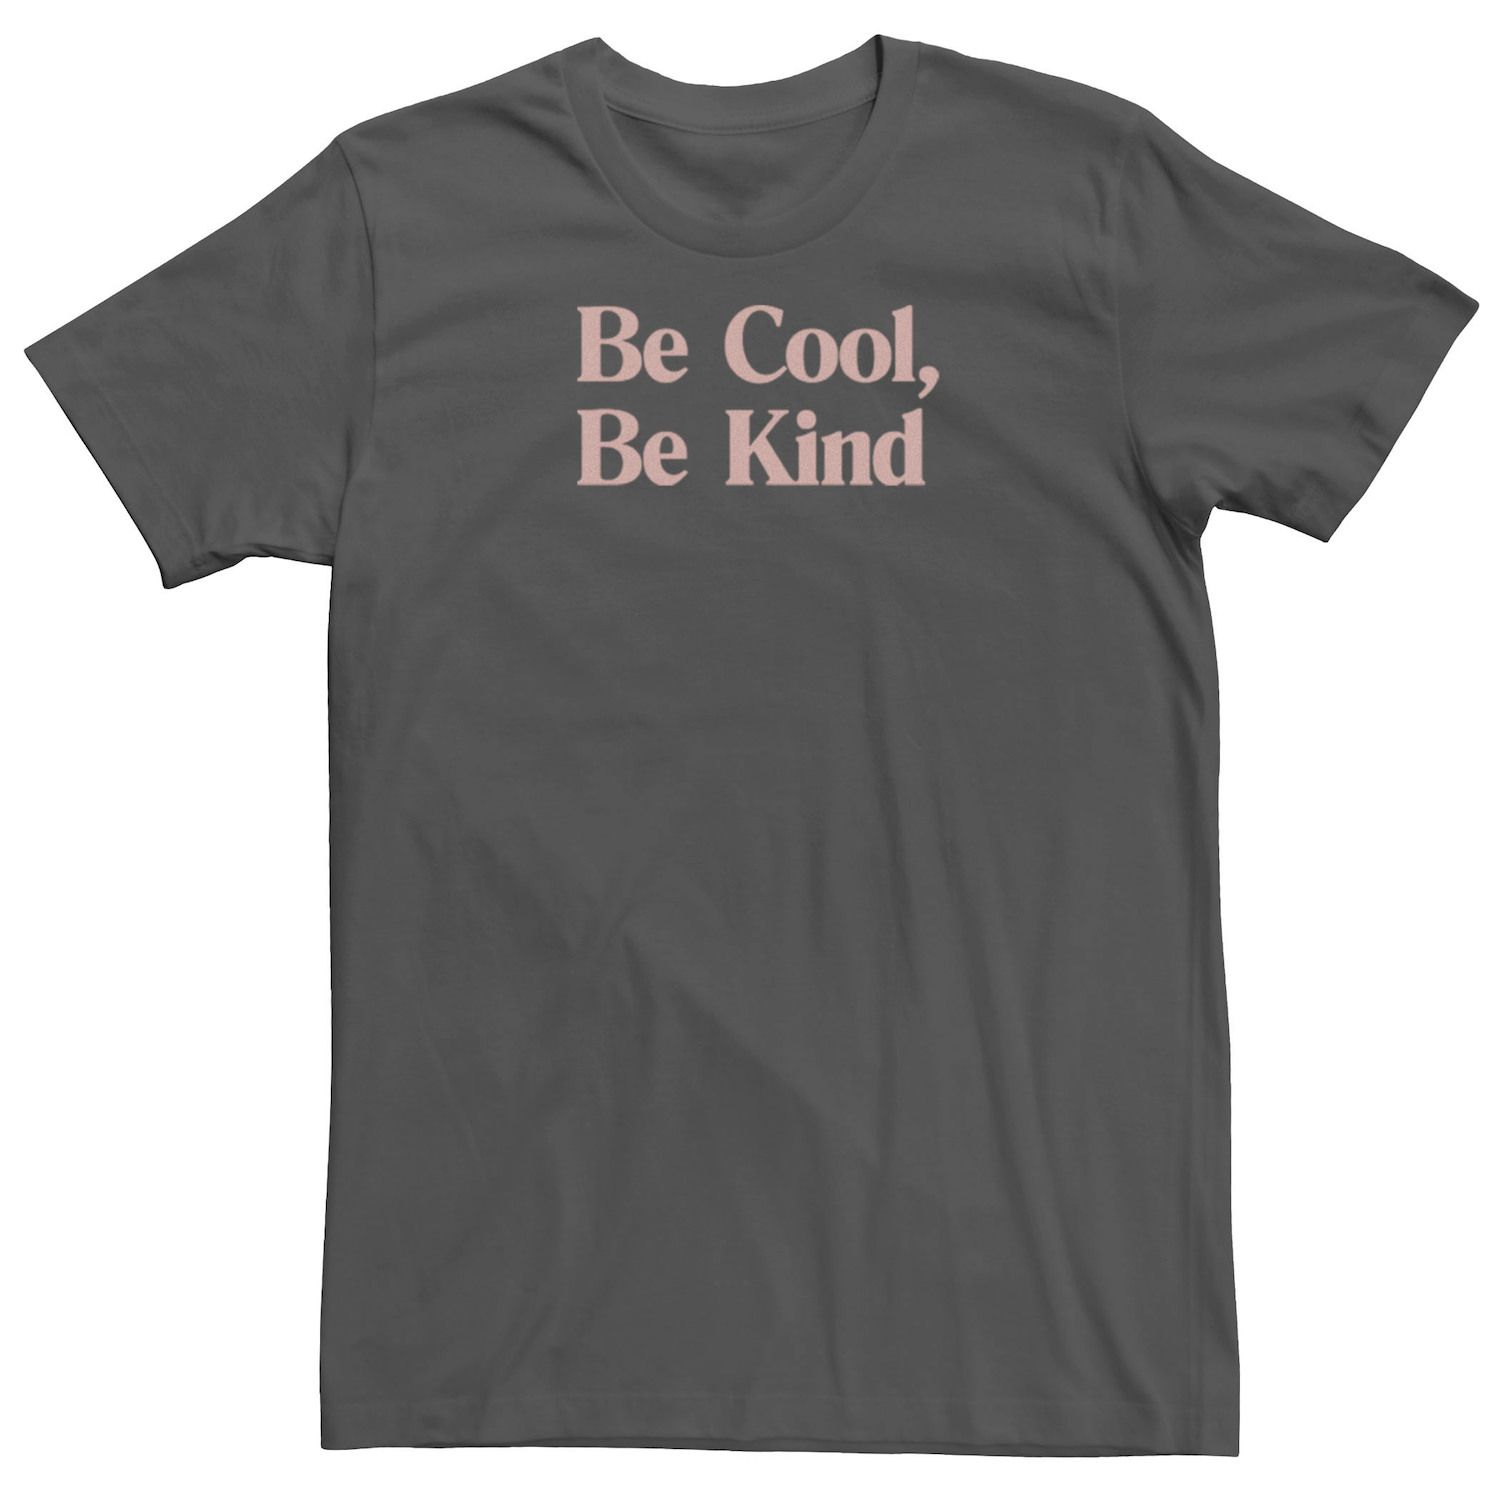 Мужская футболка с надписью Fifth Sun Be Cool Be Kind Licensed Character